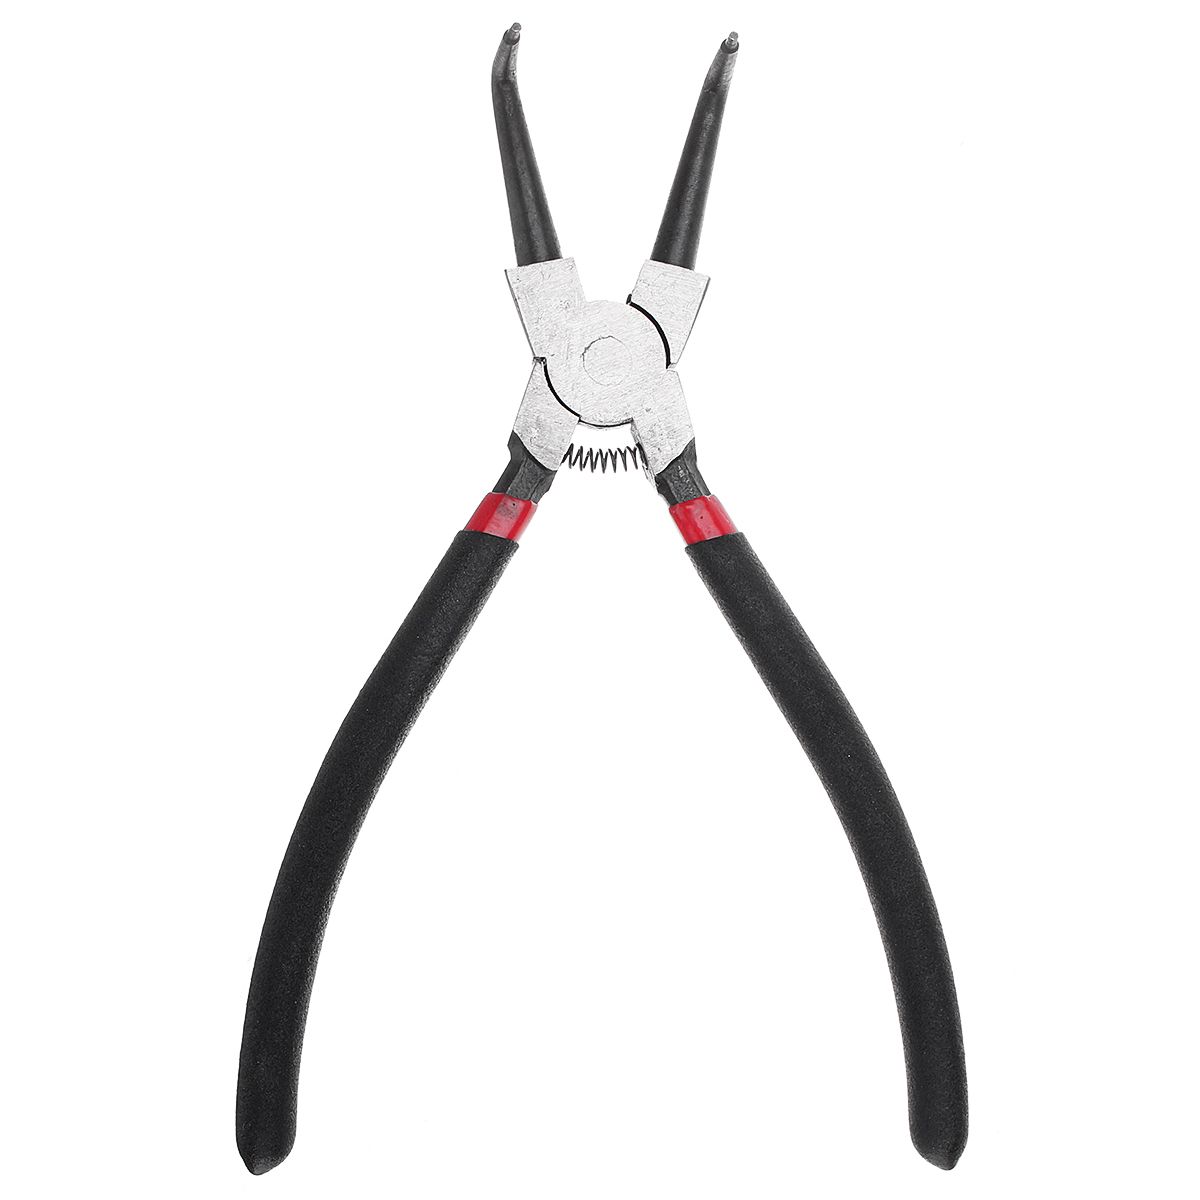 9-Inch-Steel-Circlip-Snap-Ring-Pliers-Internal-External-Straight-Retaining-Clip-Tool-1448421